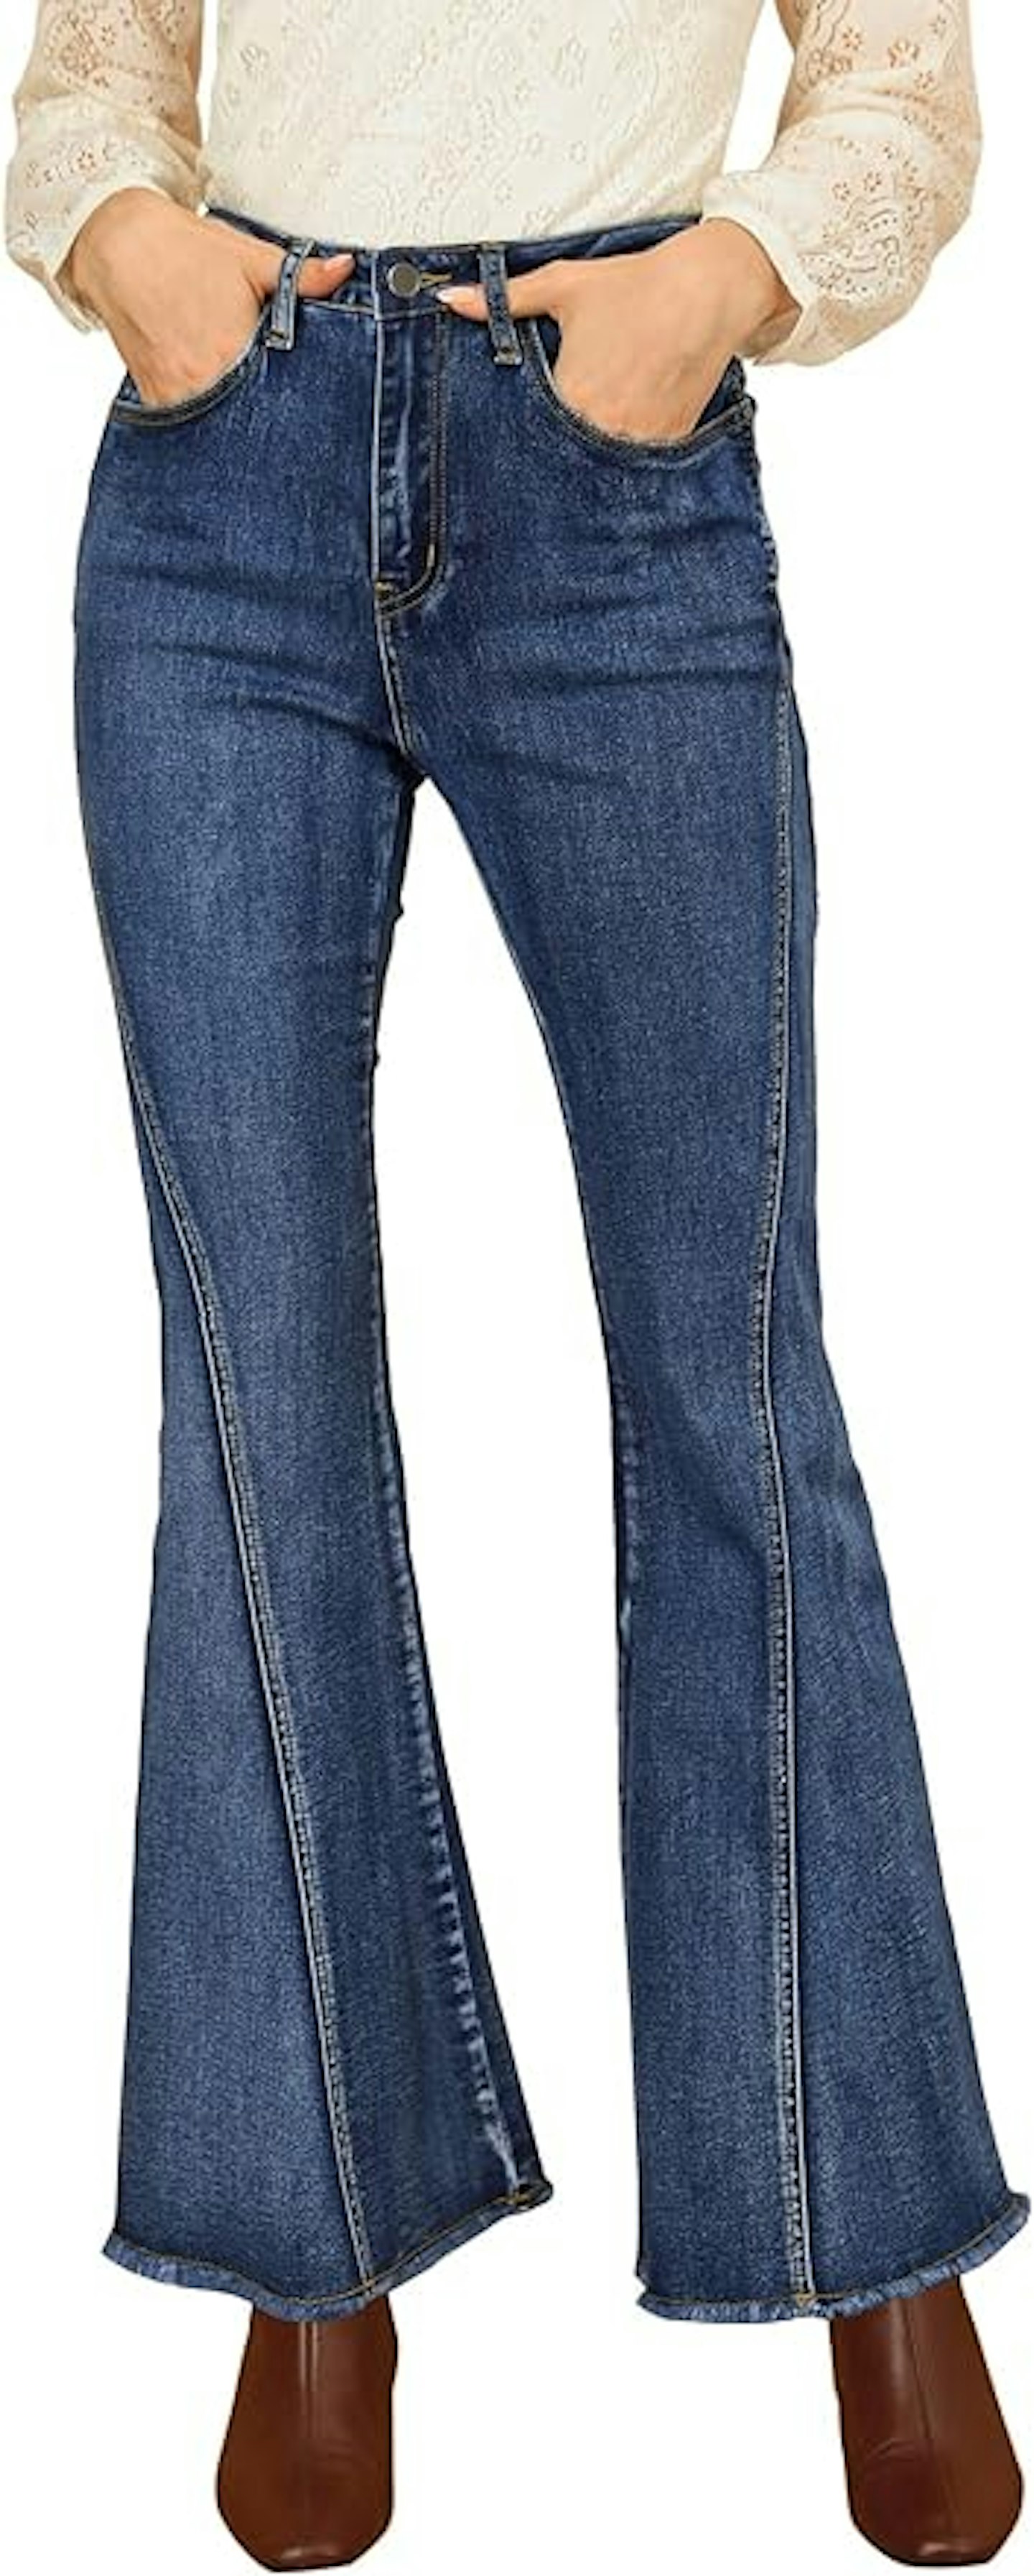 Allegra K Women's 70s Vintage Flare Jeans